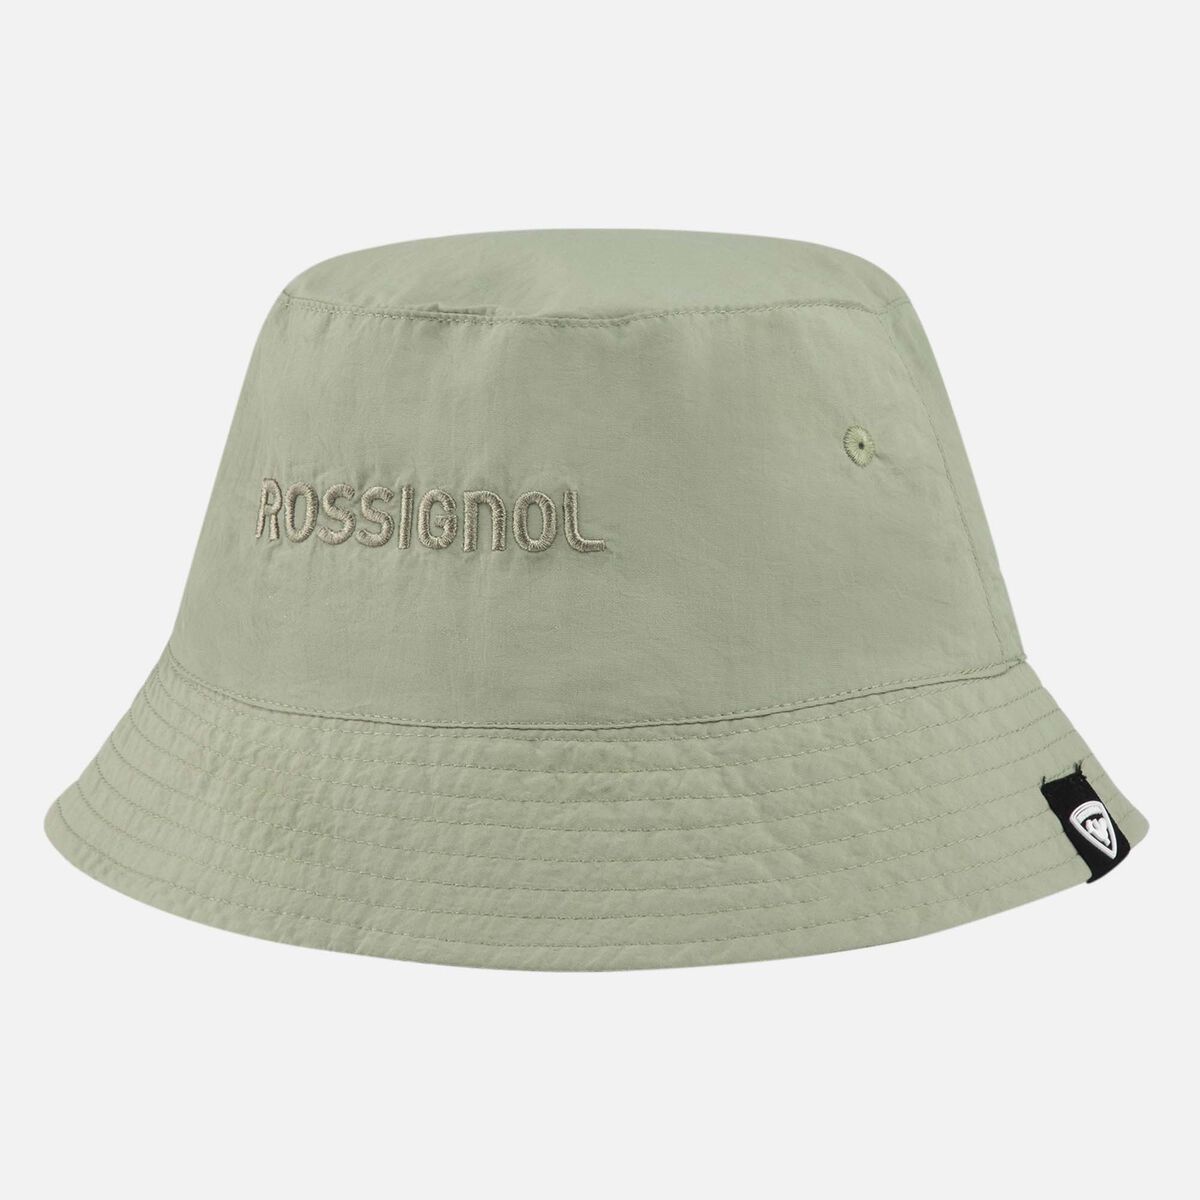 Rossignol Unisex Bucket Hat Green